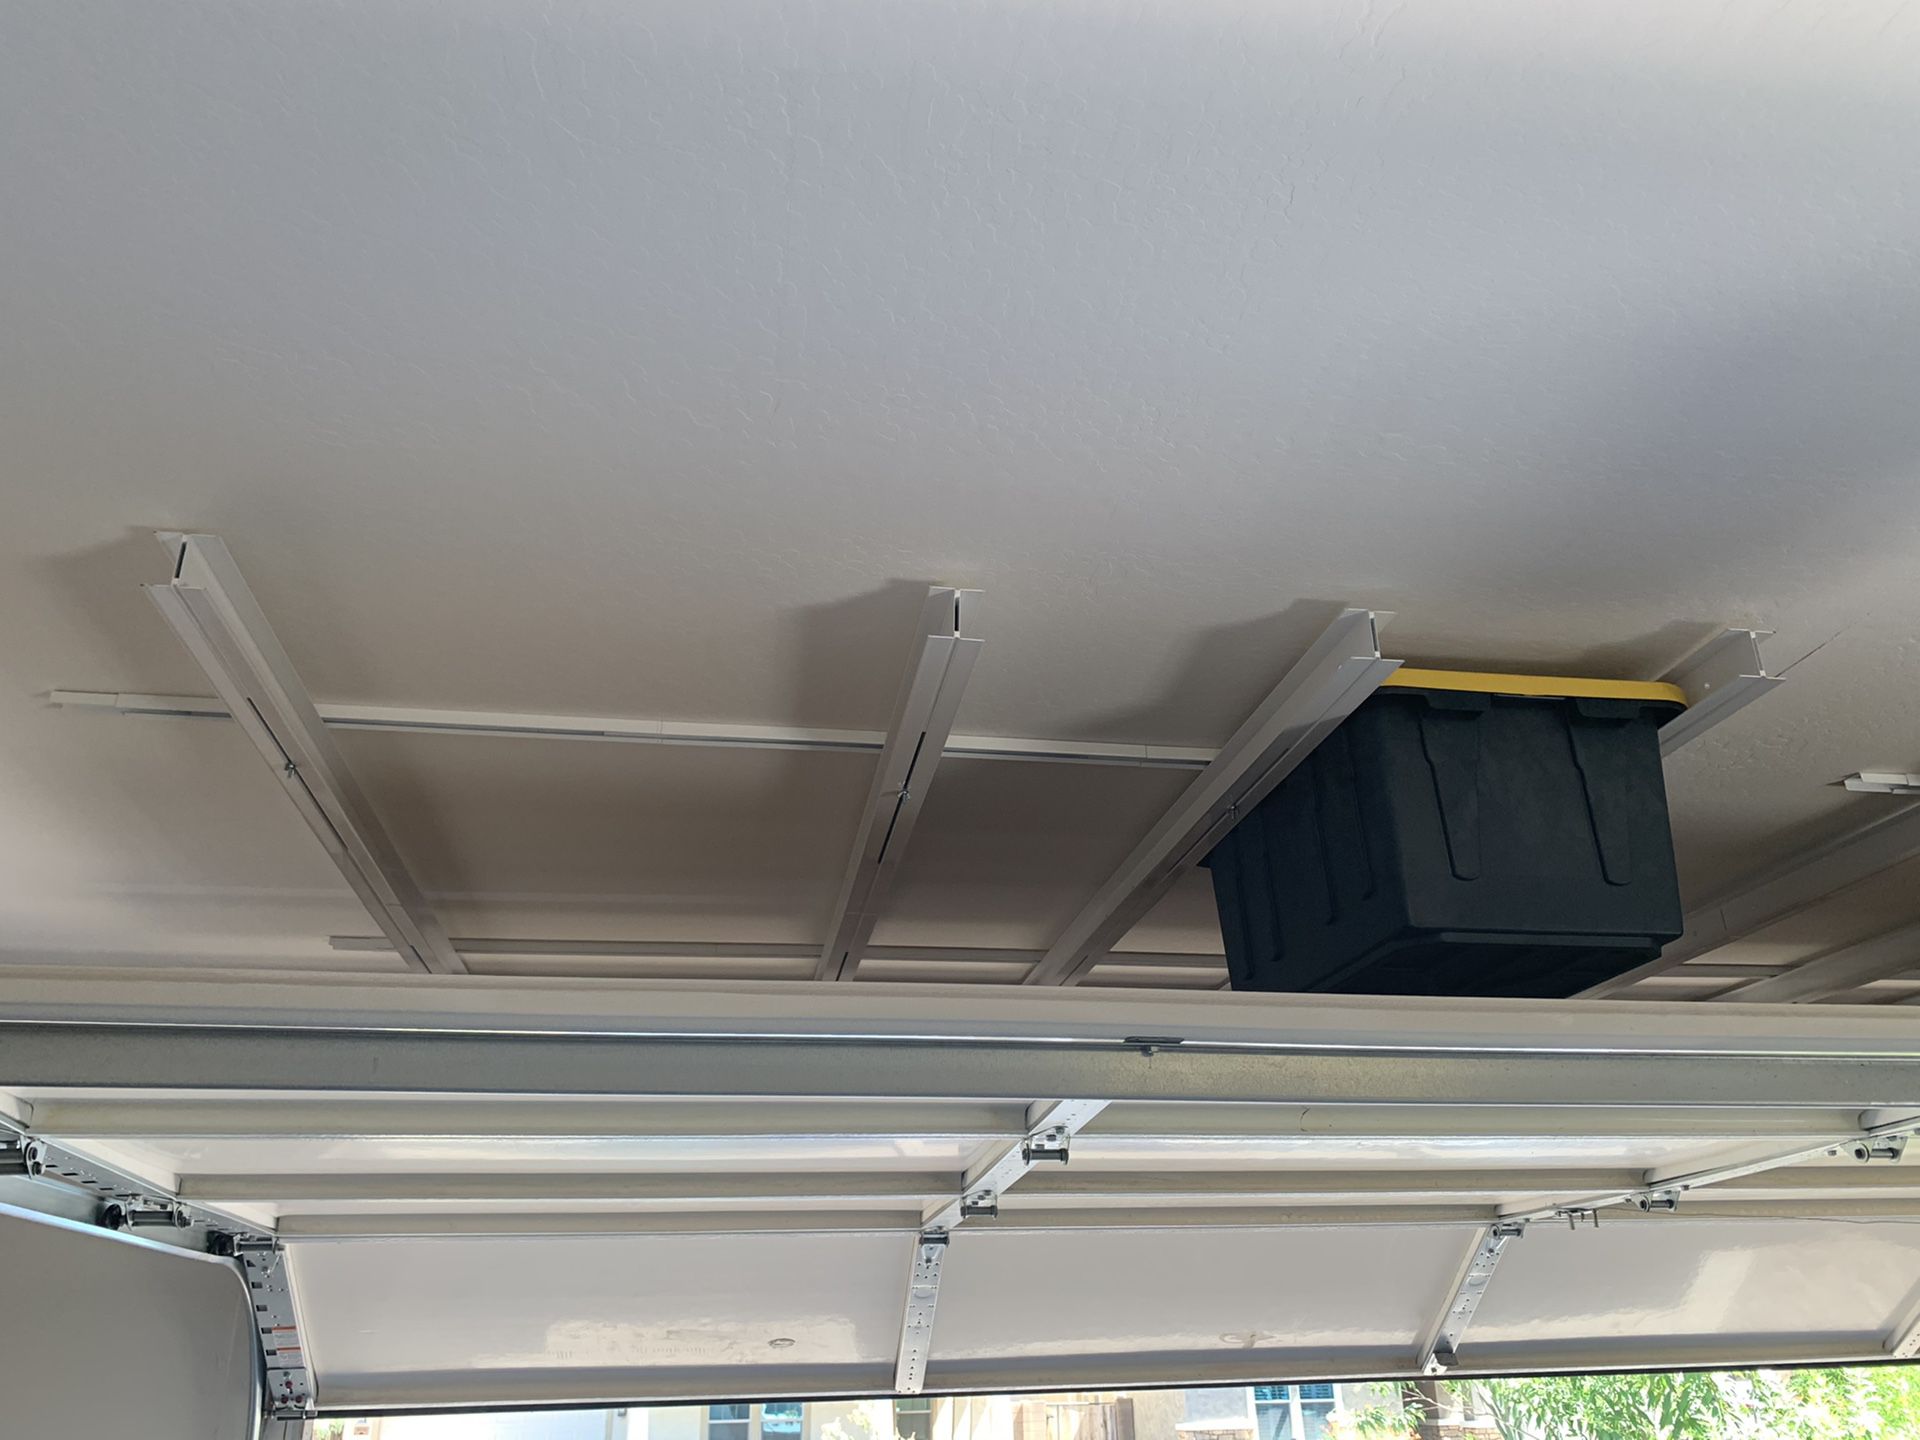 Garage Ceiling Overhead Storage Racks/Shelves